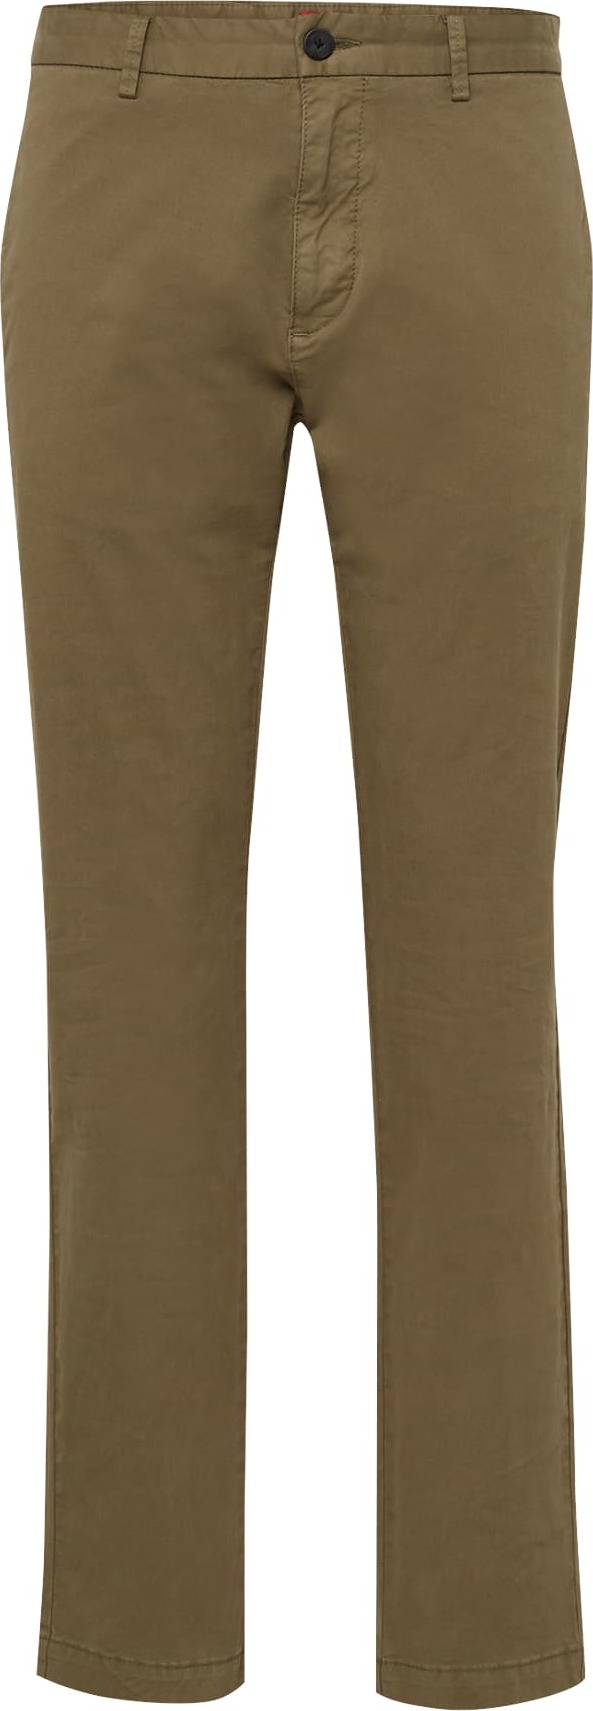 HUGO Chino kalhoty 'David' khaki